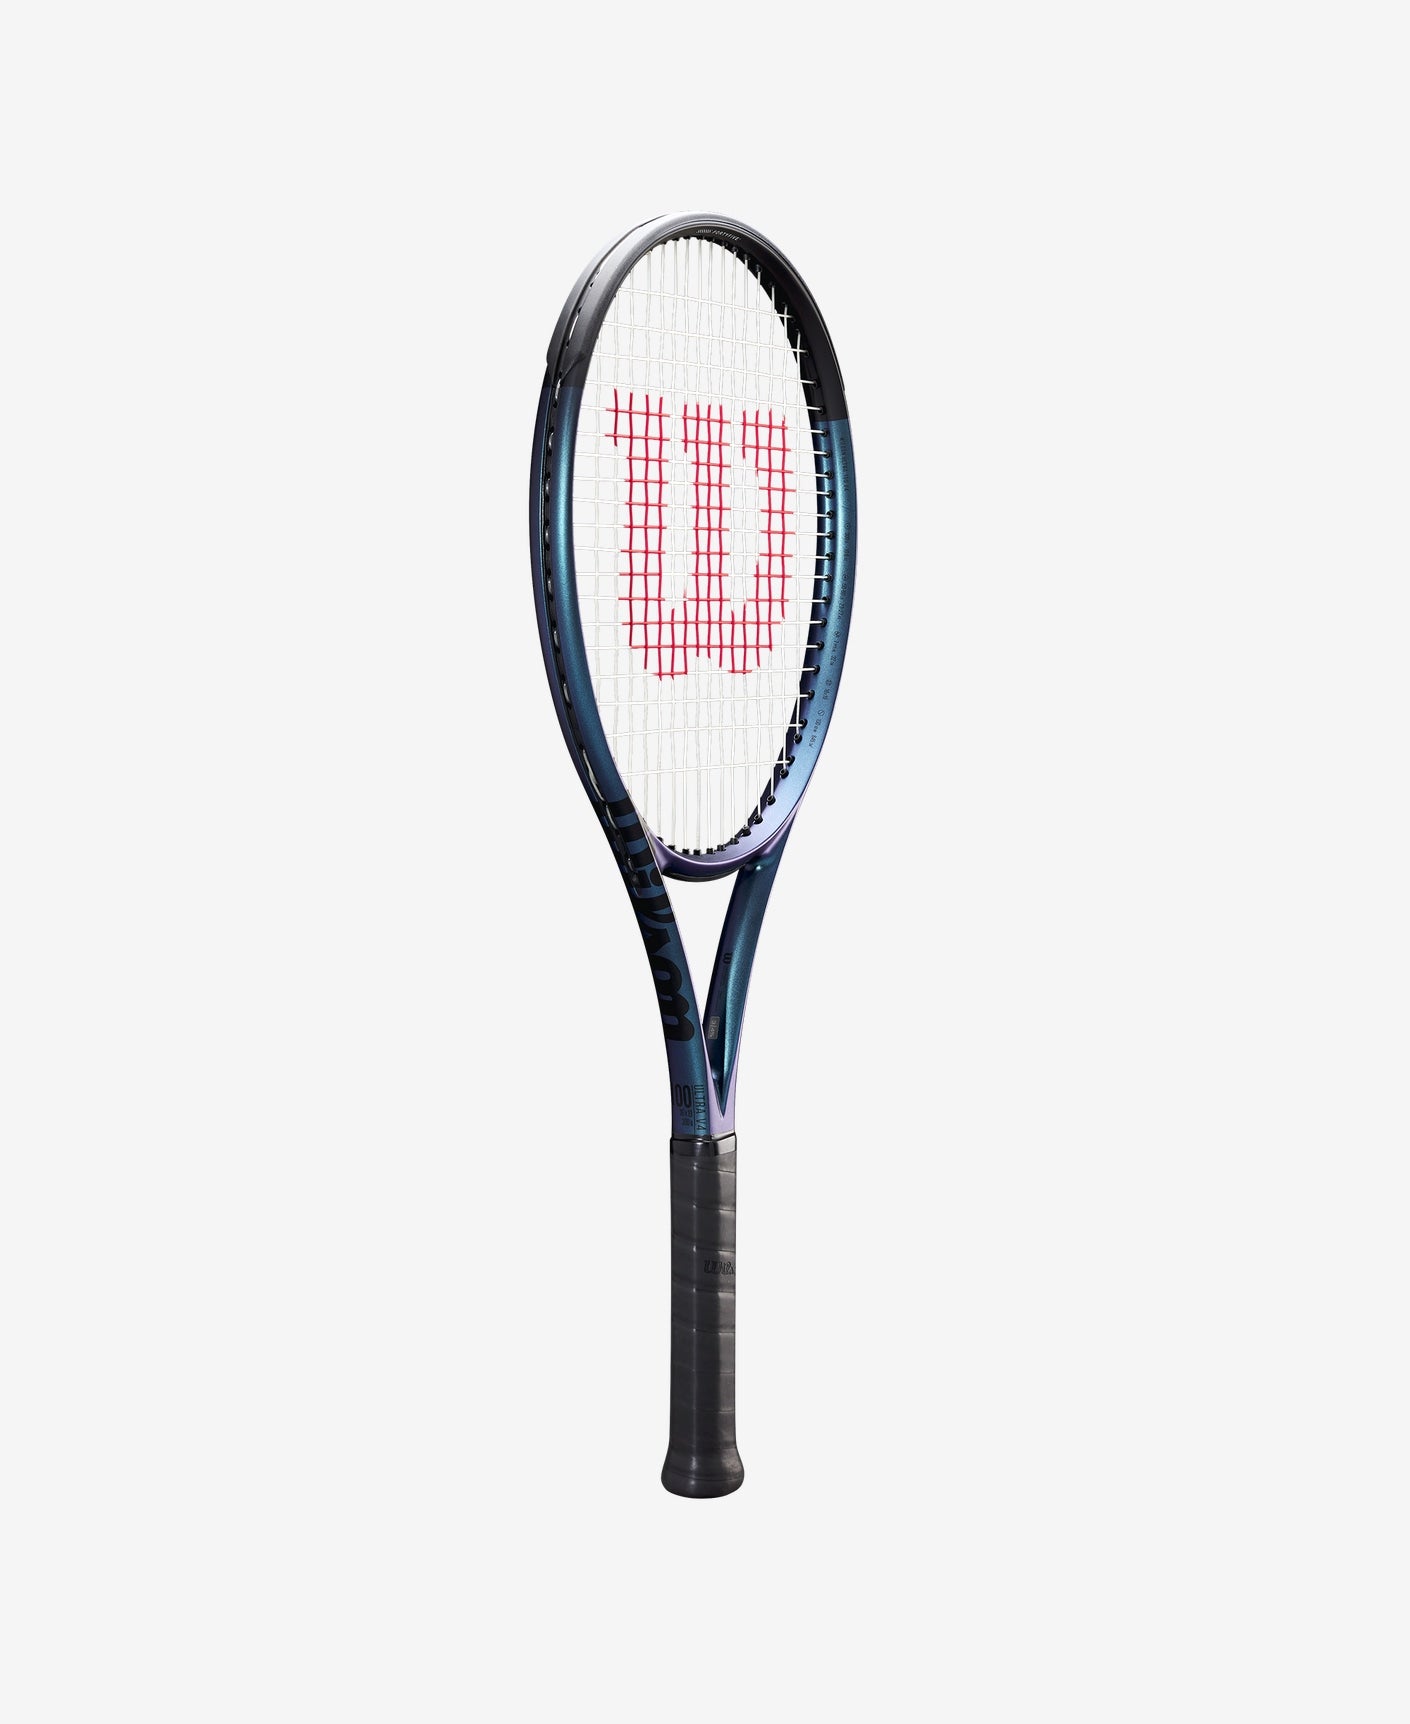 Wilson Ultra 100 V4 Tennis Racket displaying its unique color-shifting blue design